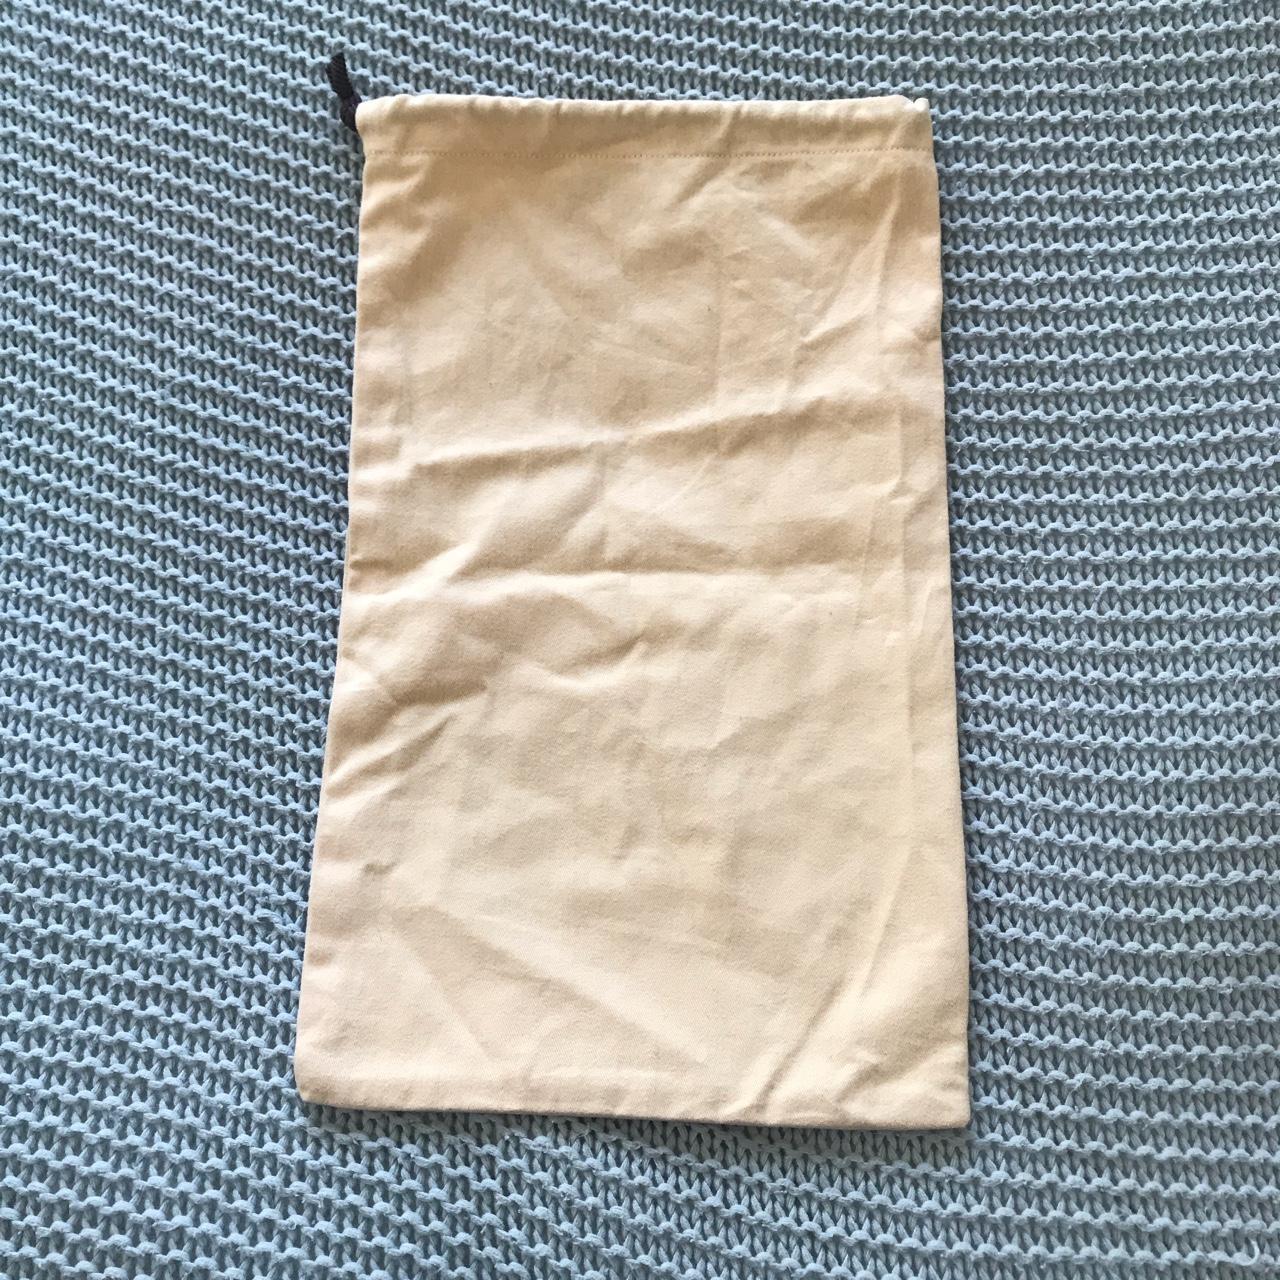 brea medium louis vuitton bag. receipt and dust bag - Depop